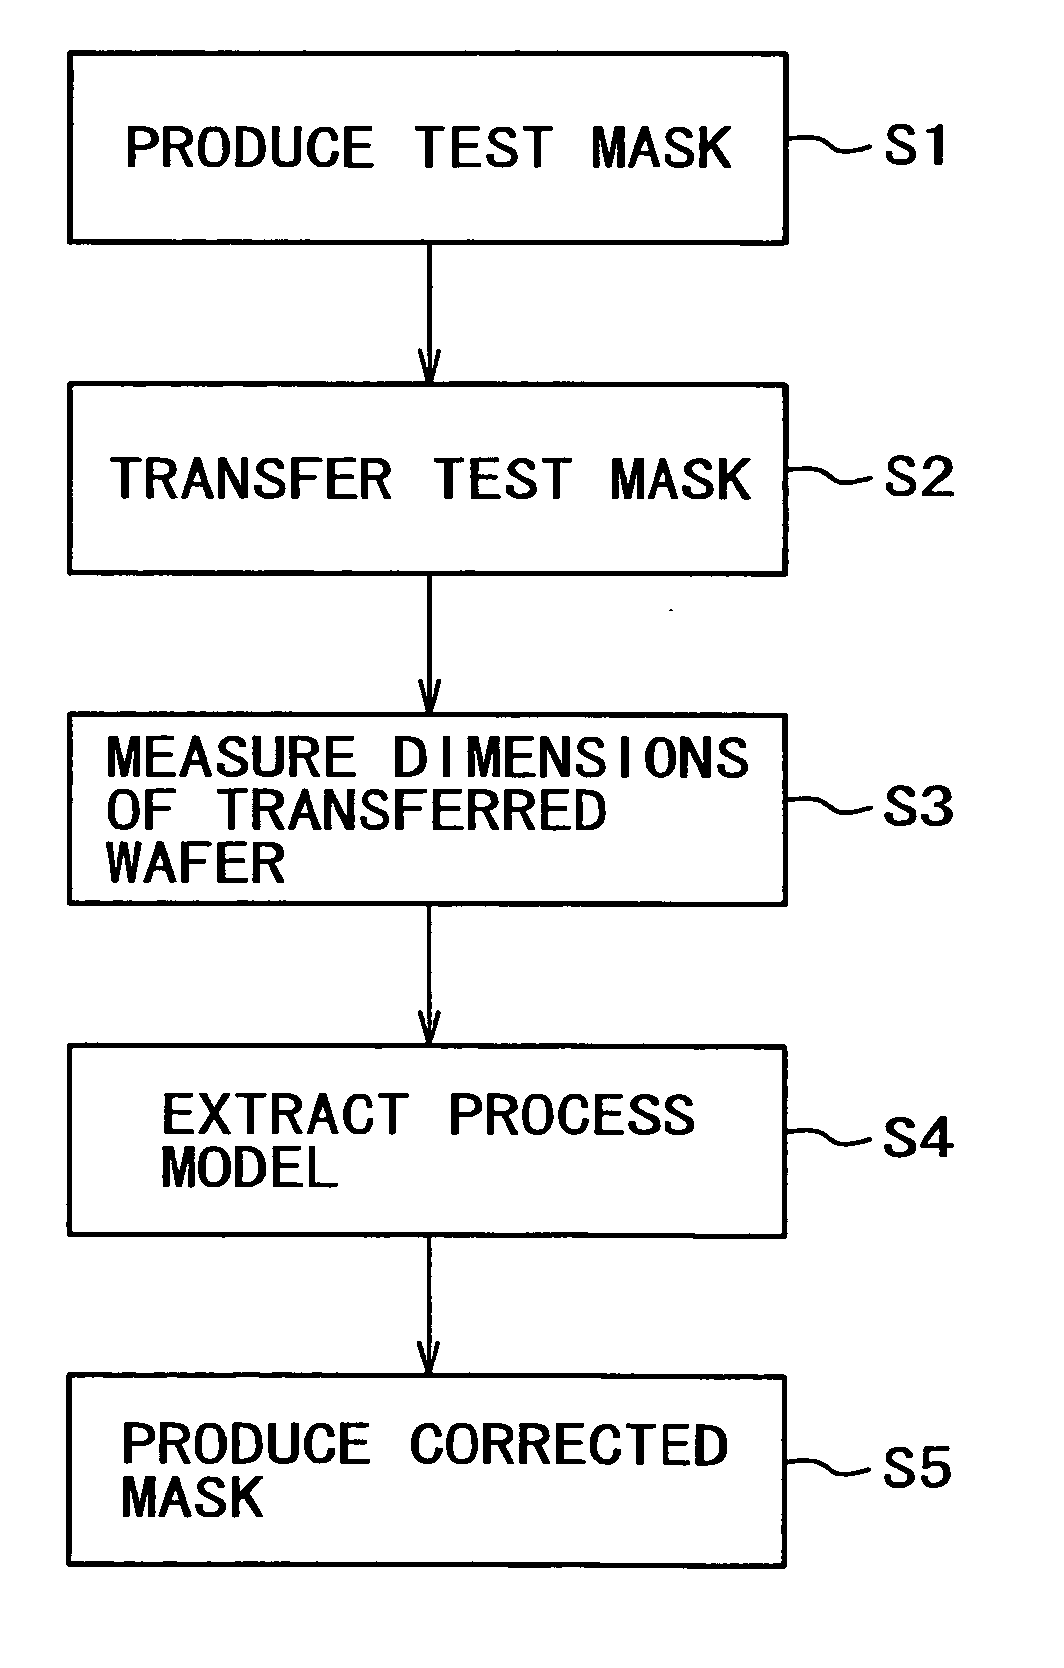 Mask correcting method